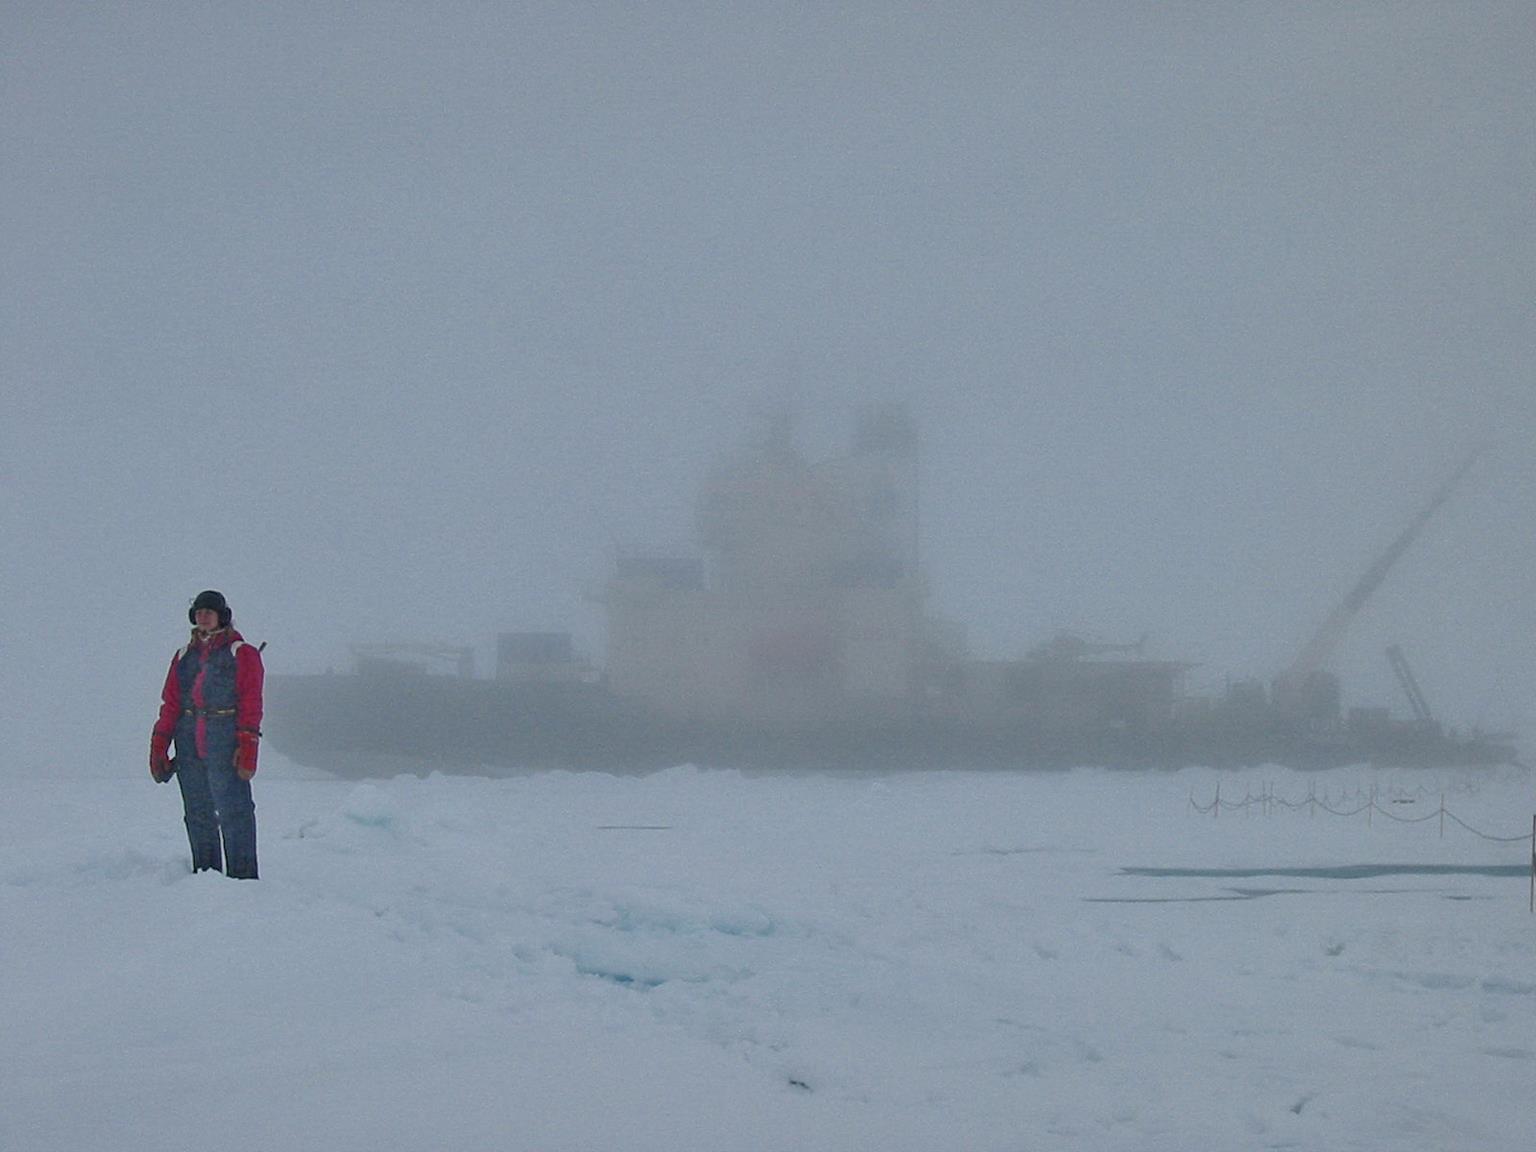 Icebreaker Oden near the North Pole (89 N 00 W), 2001-08-02 Fog definition